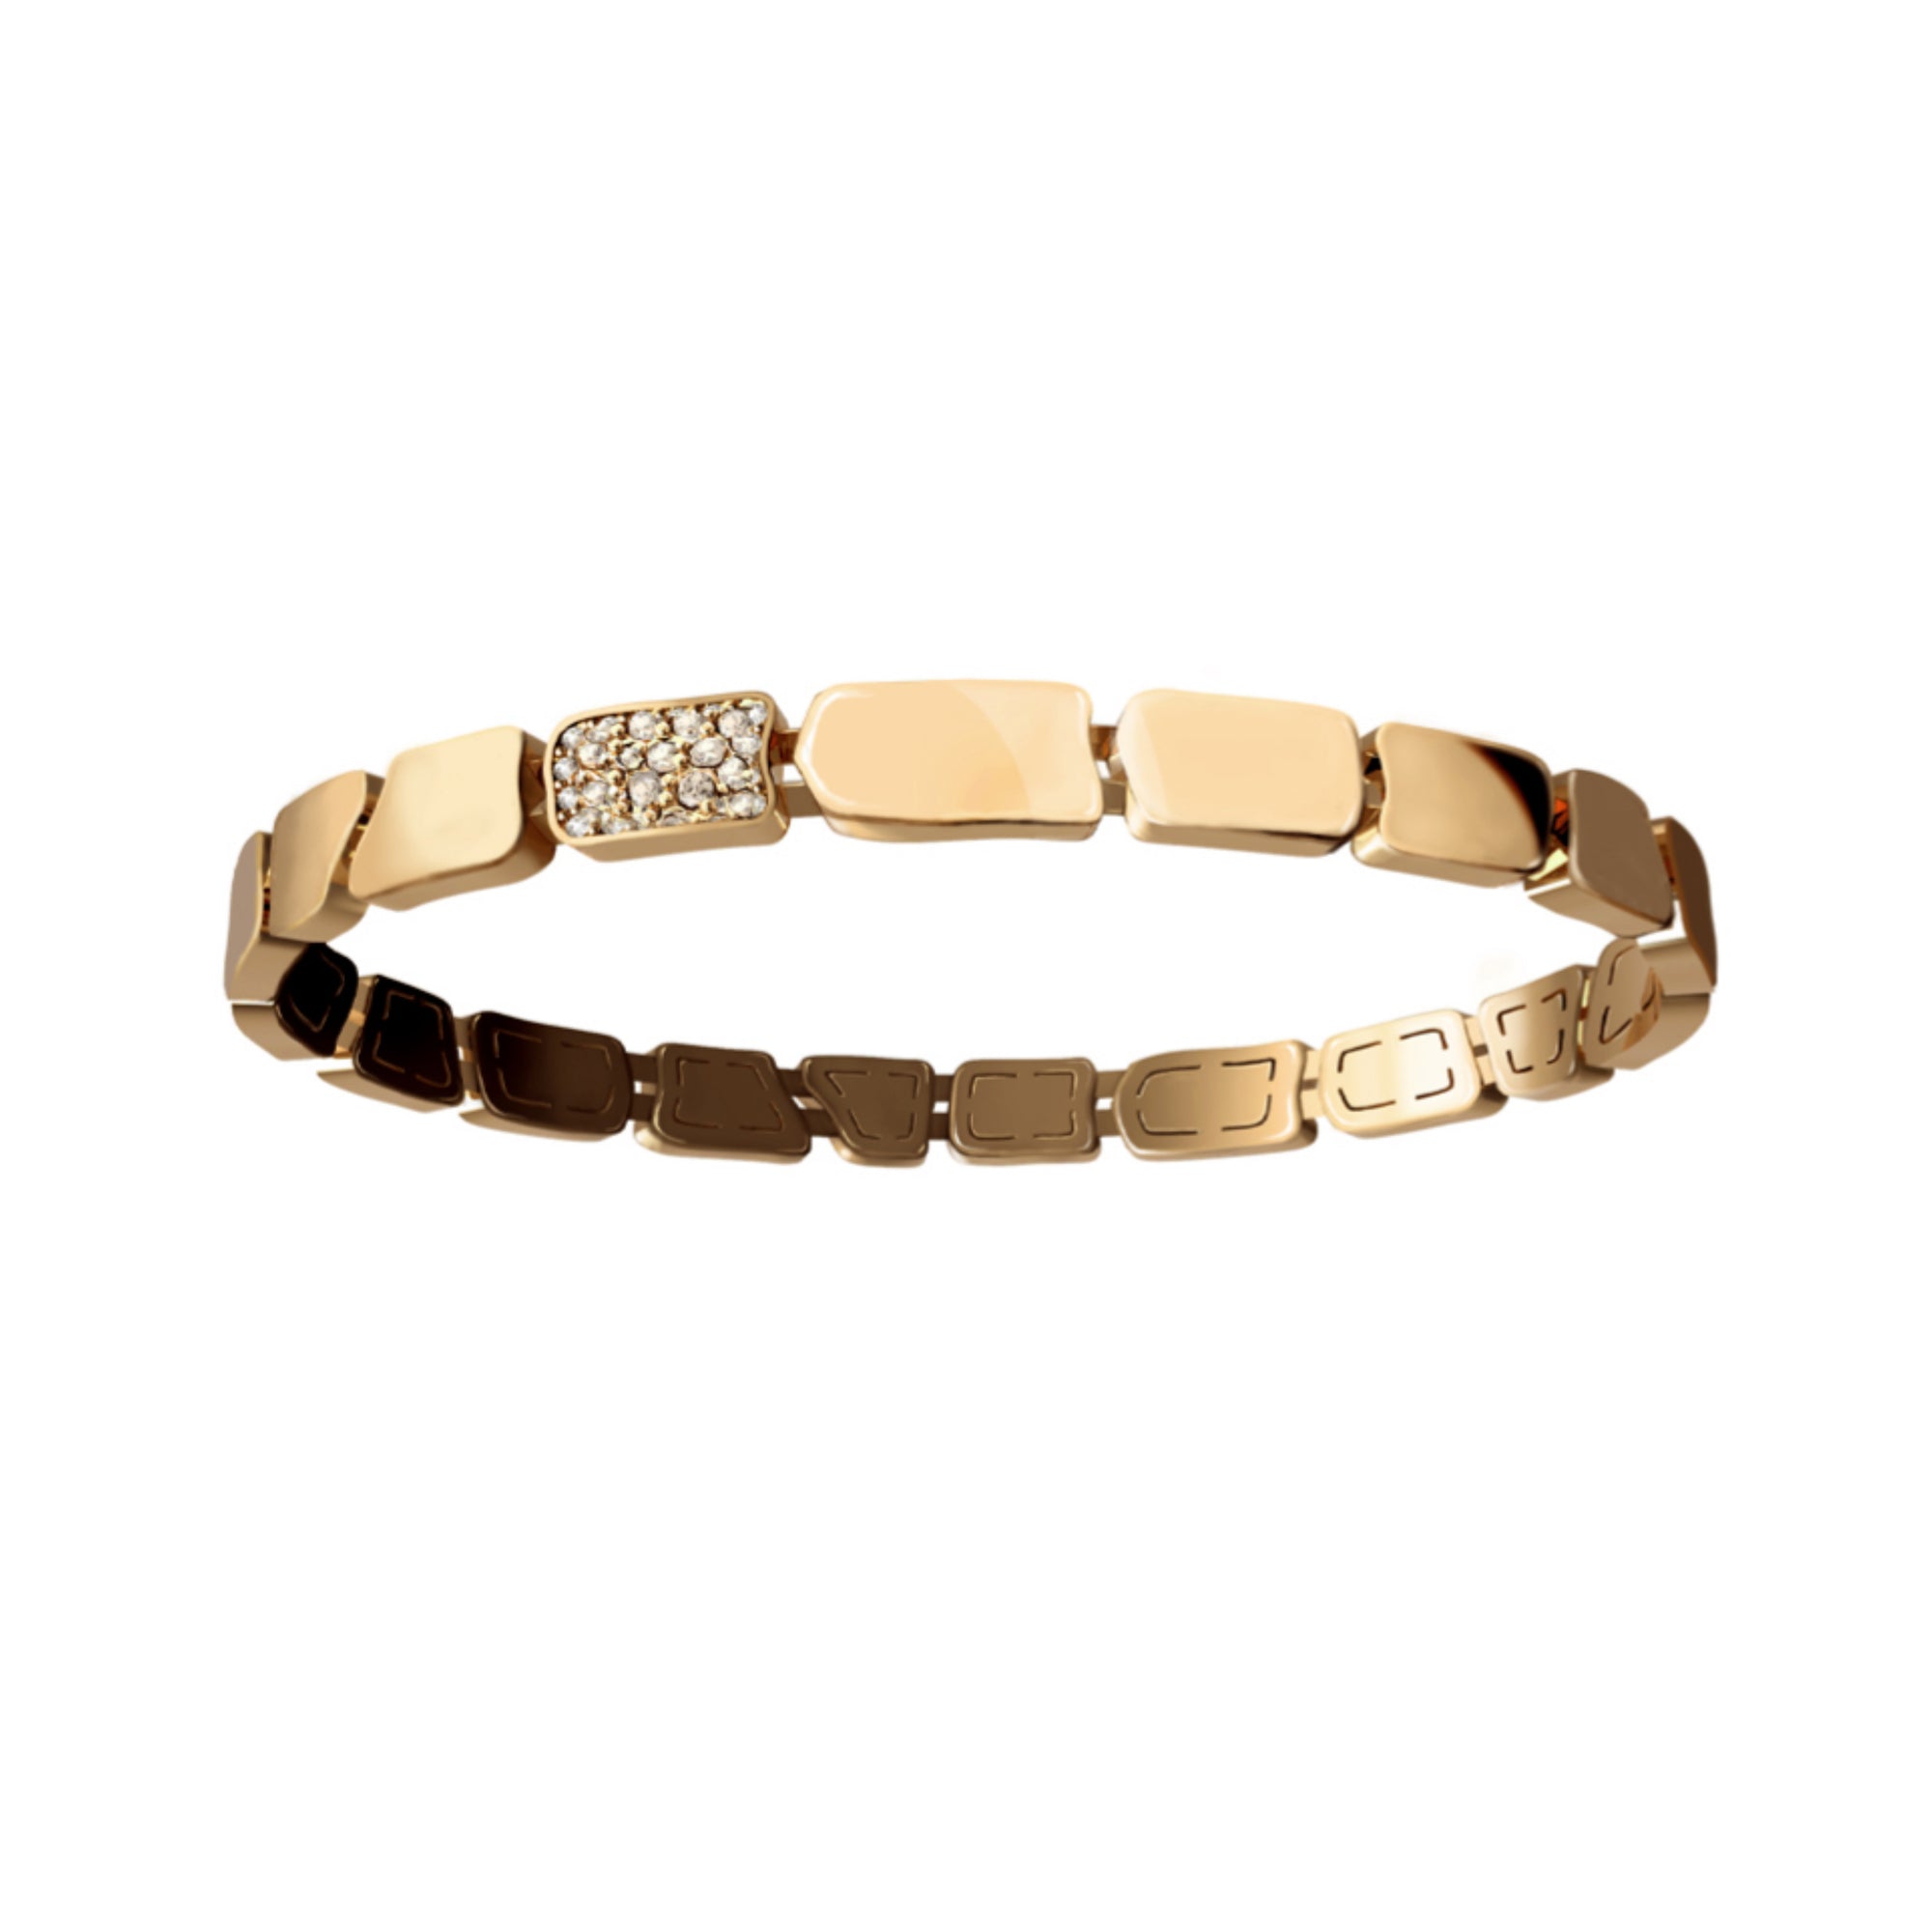 SKIN DIAMOND BRACELET YELLOW GOLD | Bracelet | 18K yellow gold, bracelet, crocodream, diamonds, skin | ORLOV